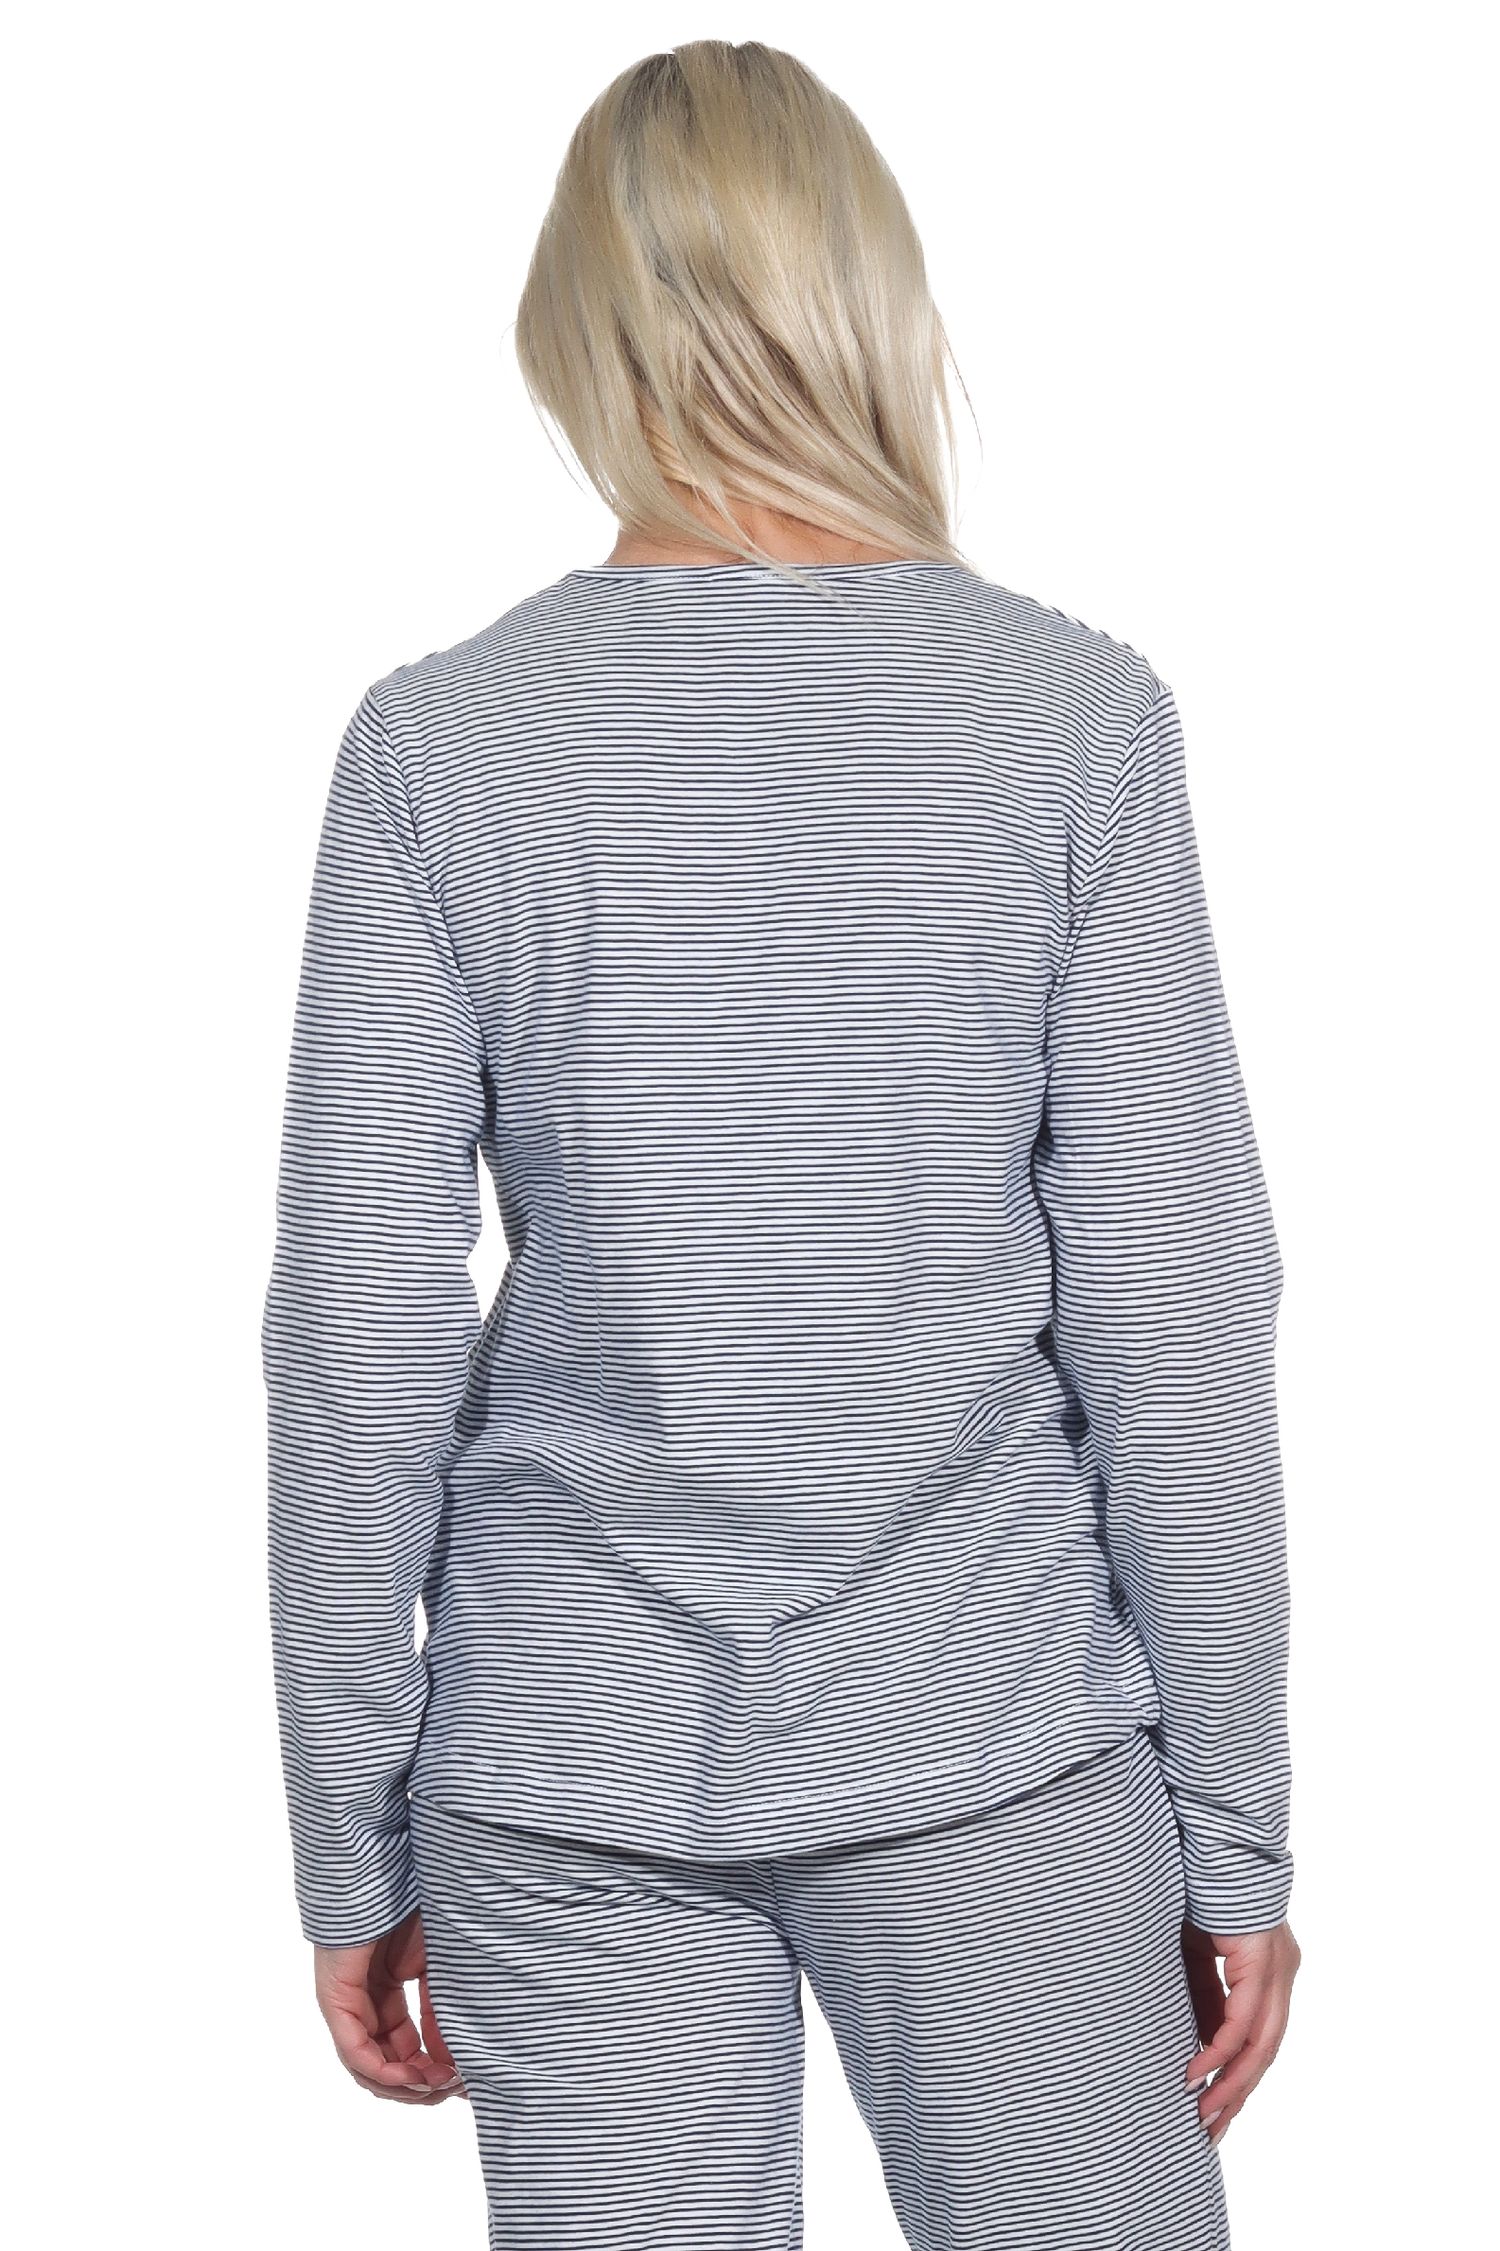 Damen Schlafanzug Pyjama Hose lang Mix & Match in Streifenoptik - perfekt zu kombinieren